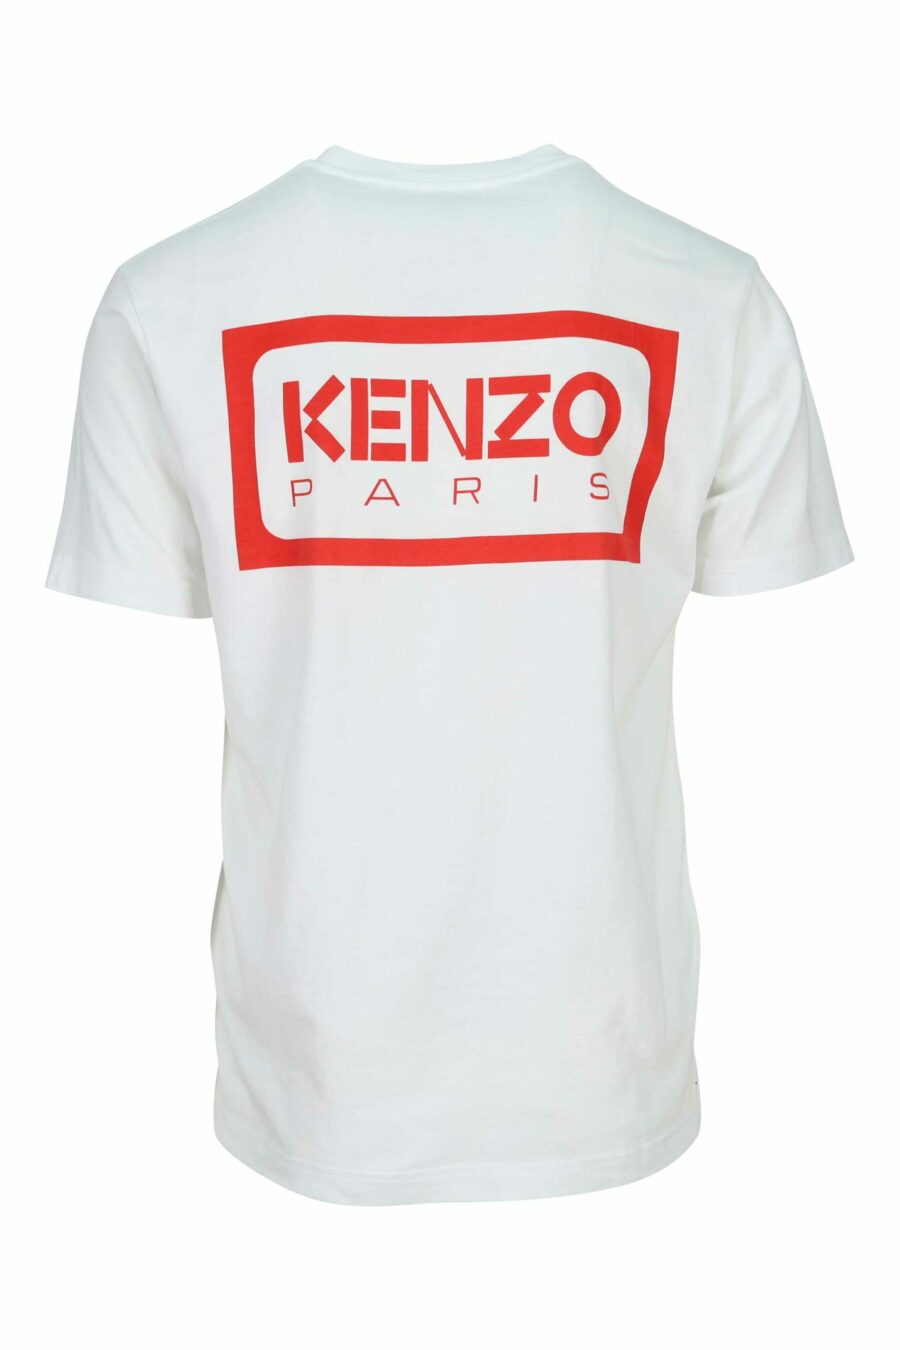 T-shirt branca com minilogo "KP classic" - 3612230624641 3 scaled